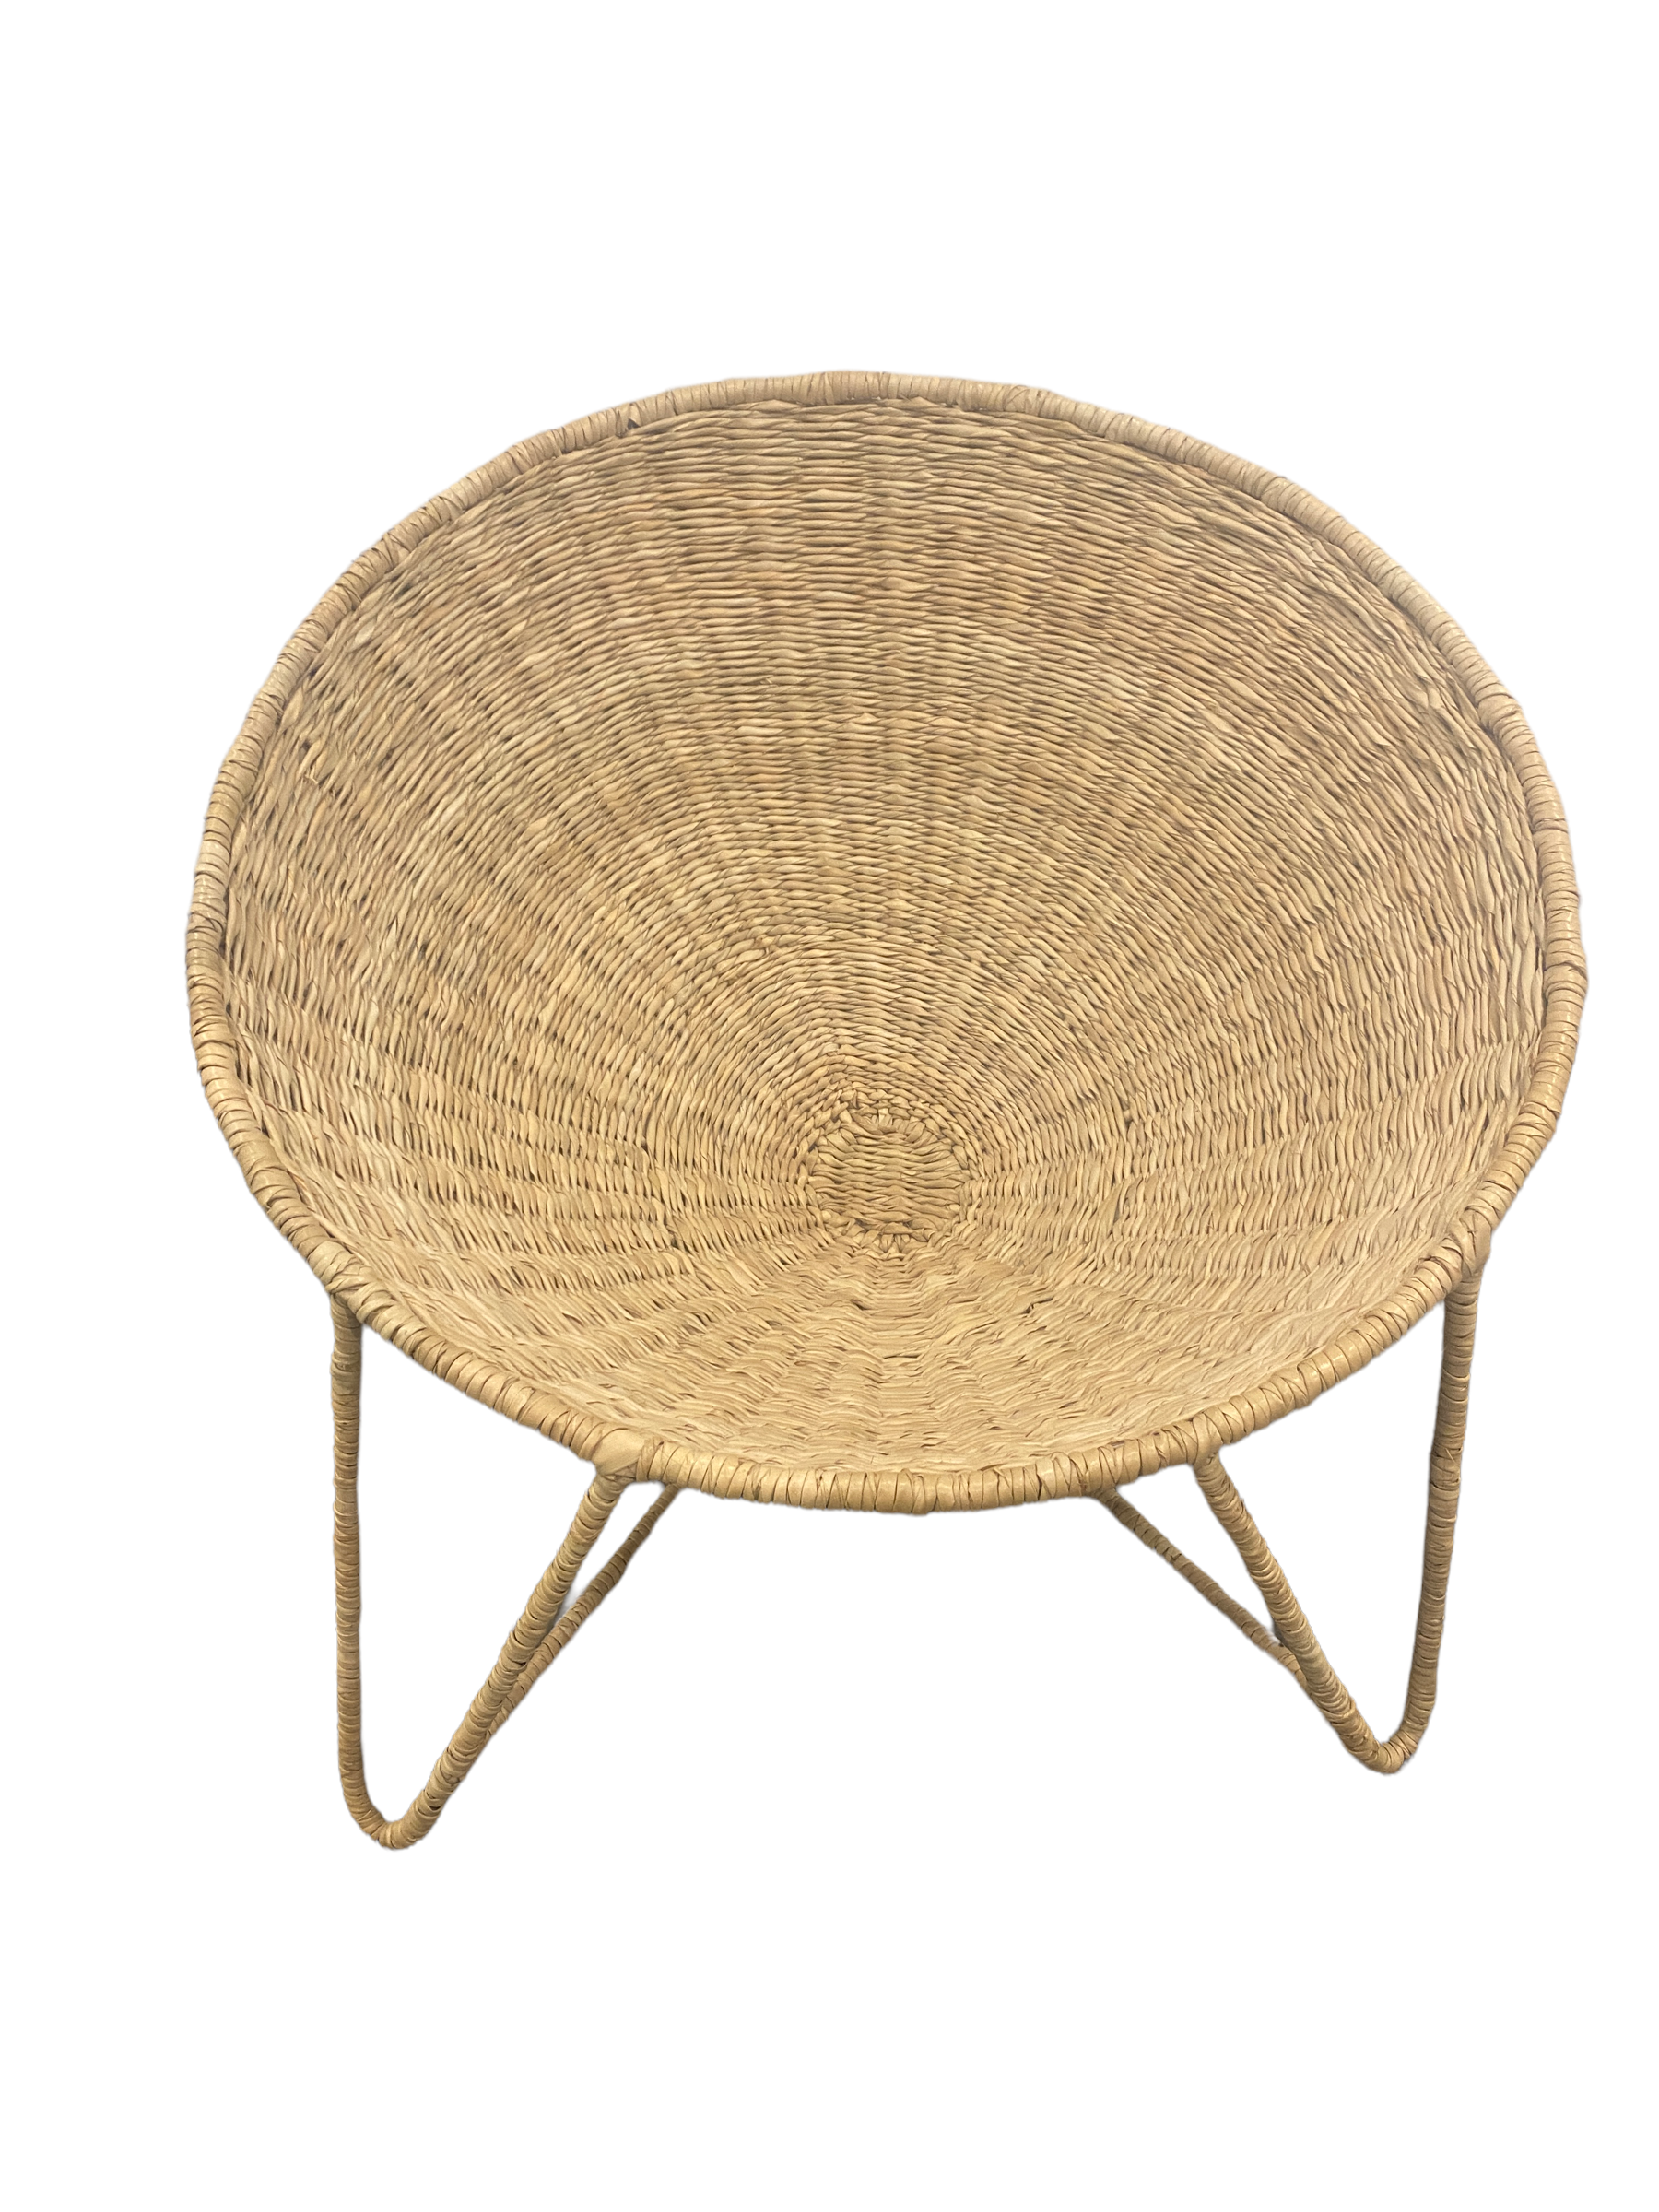 Handwoven Bucket Chair - Mozambique (11.1)